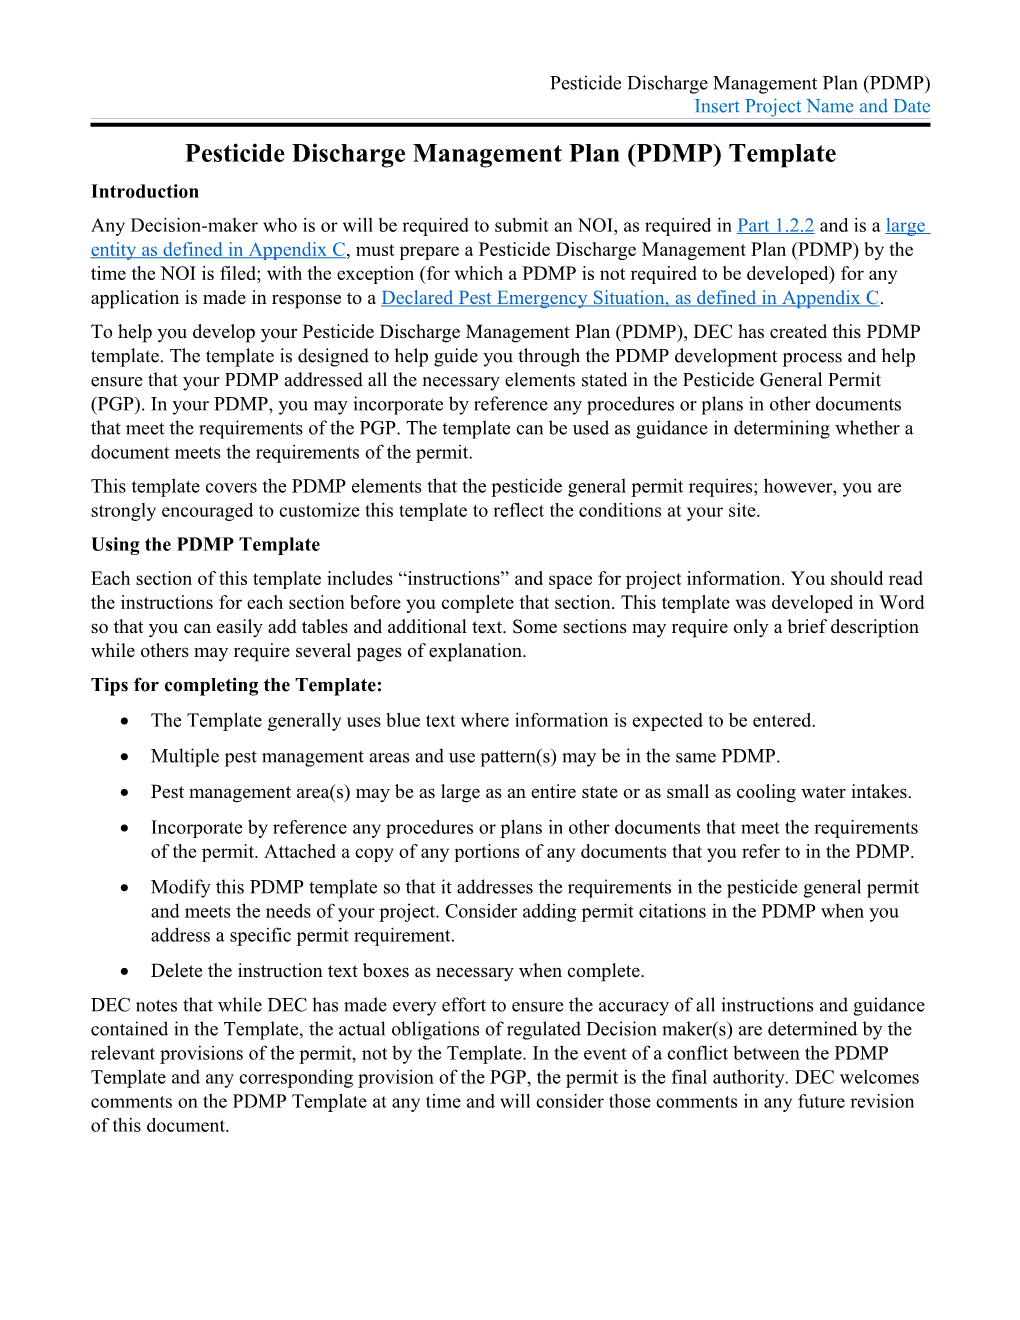 Pesticide Discharge Management Plan (PDMP) Template